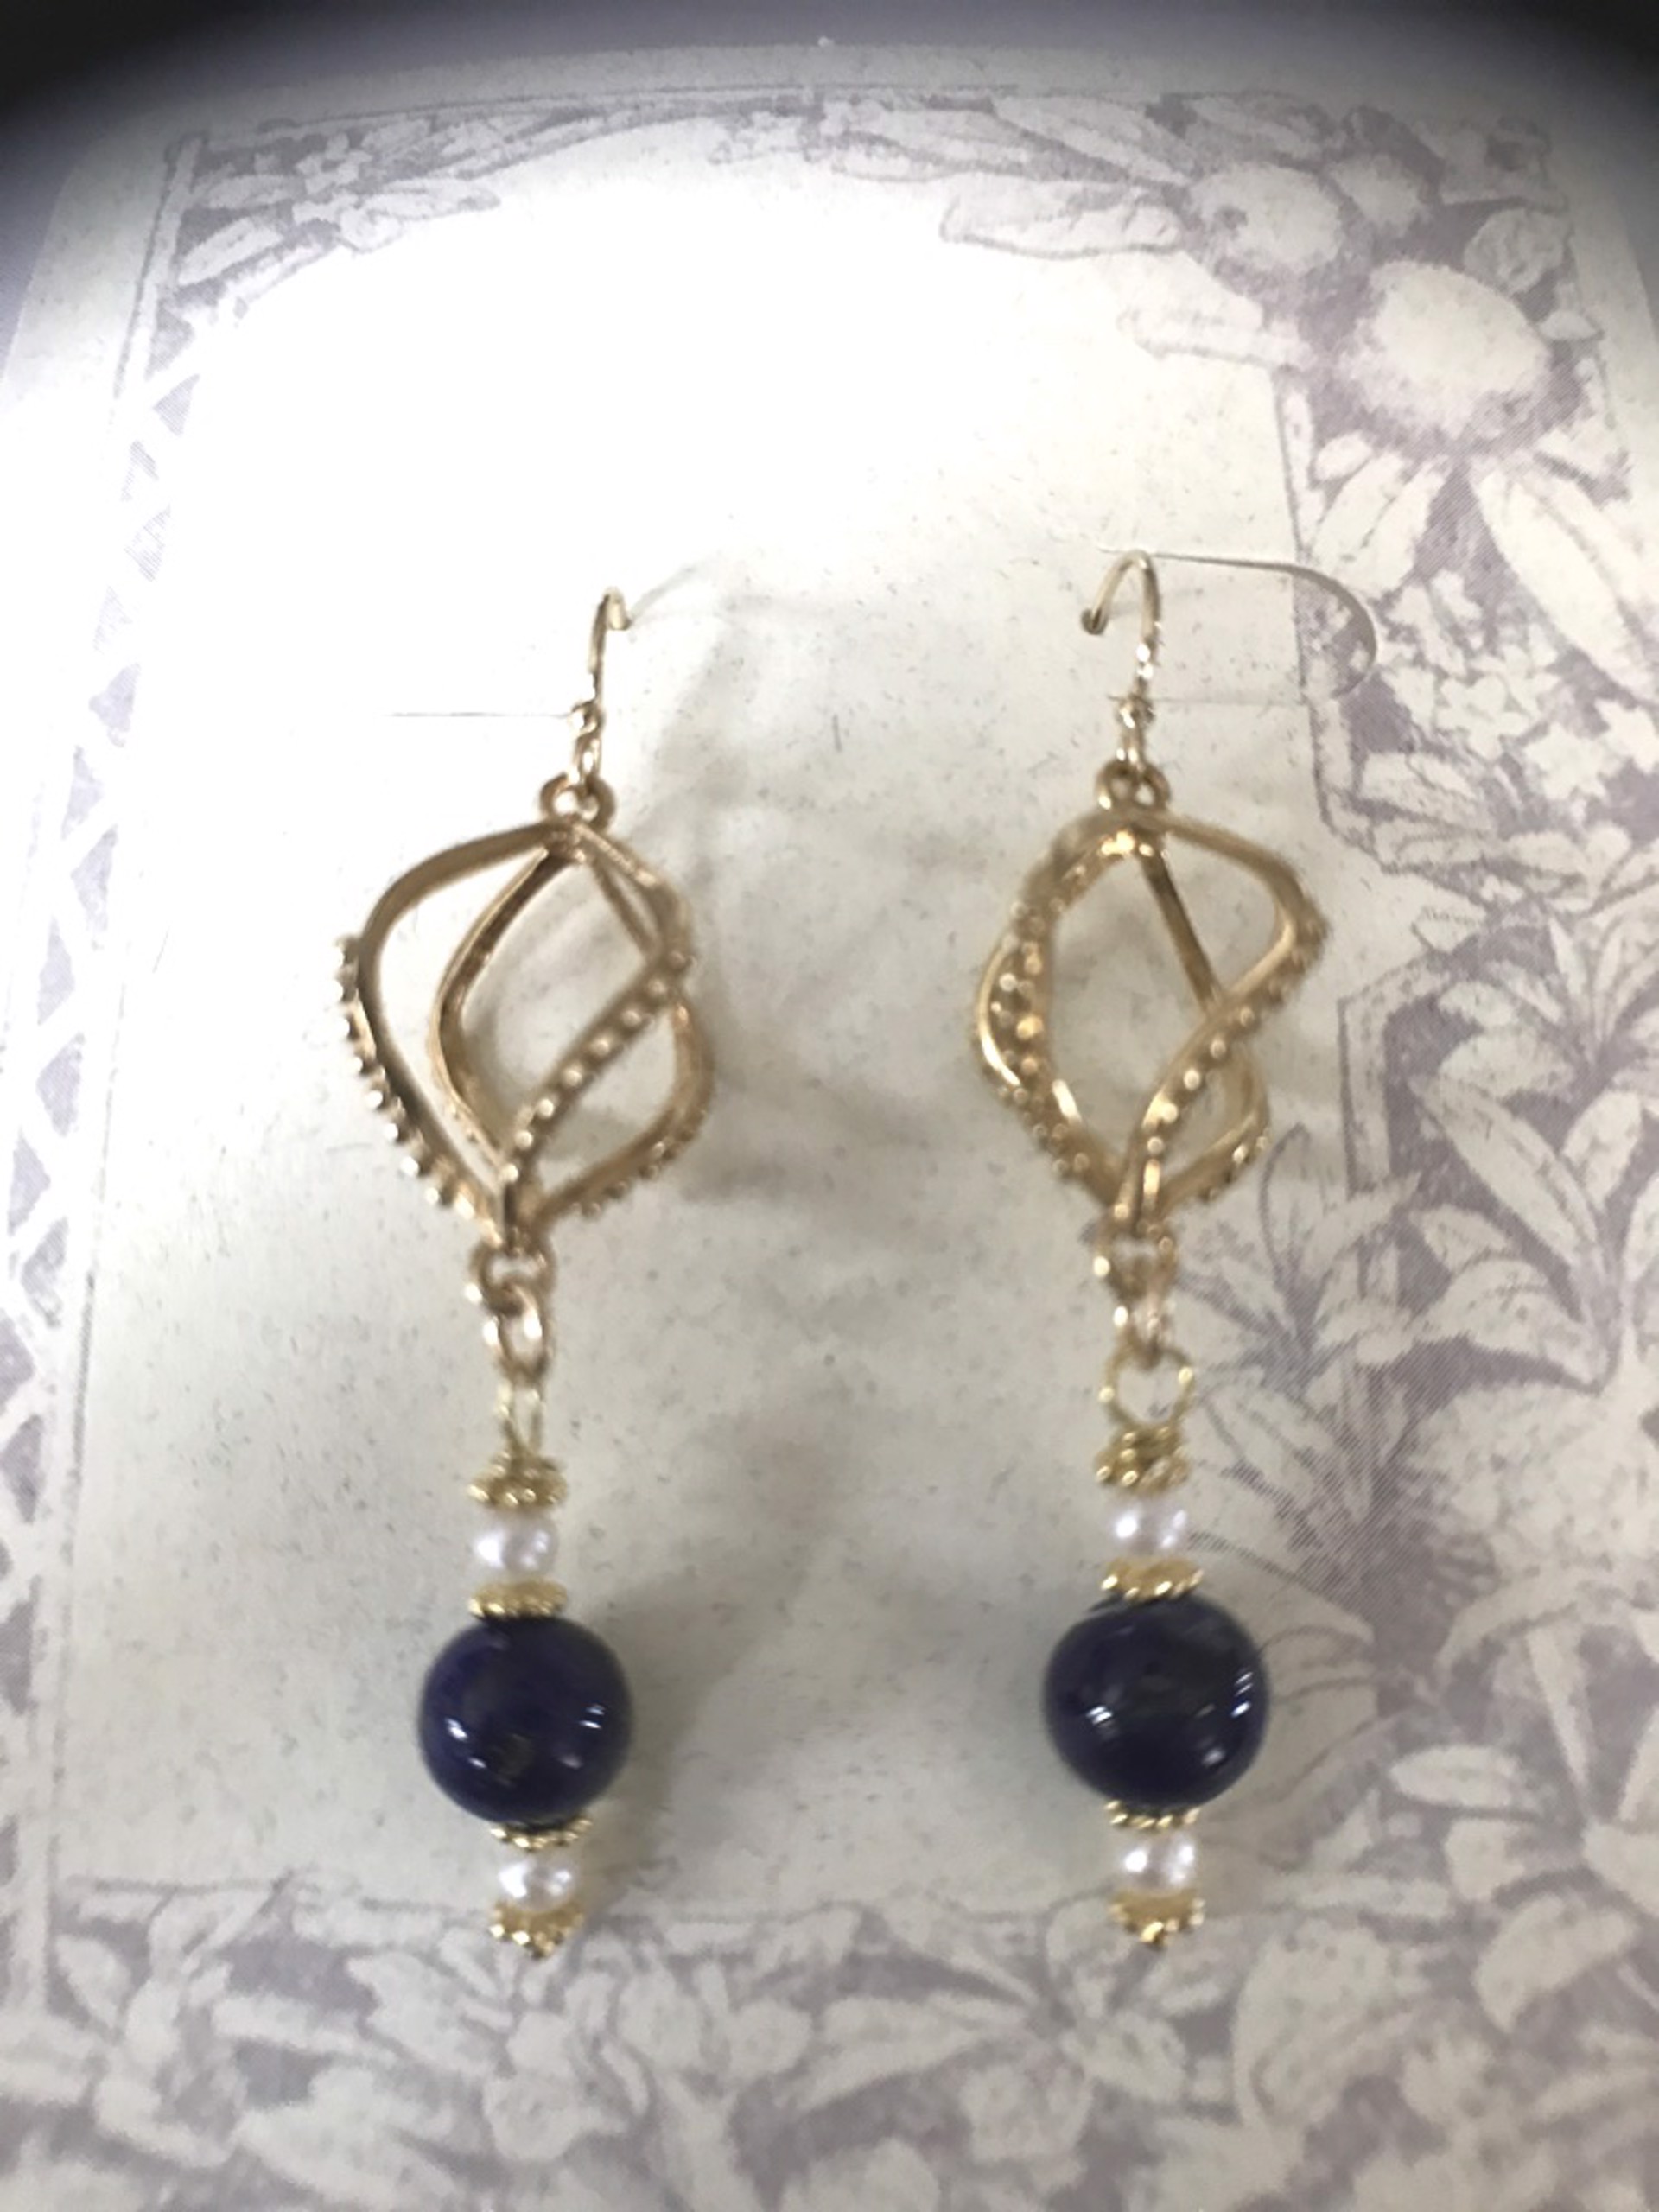 Earrings - Lapis Lazuli, Freshwater Pearls & Gold Vermeil  #8663 by Bonnie Jaus